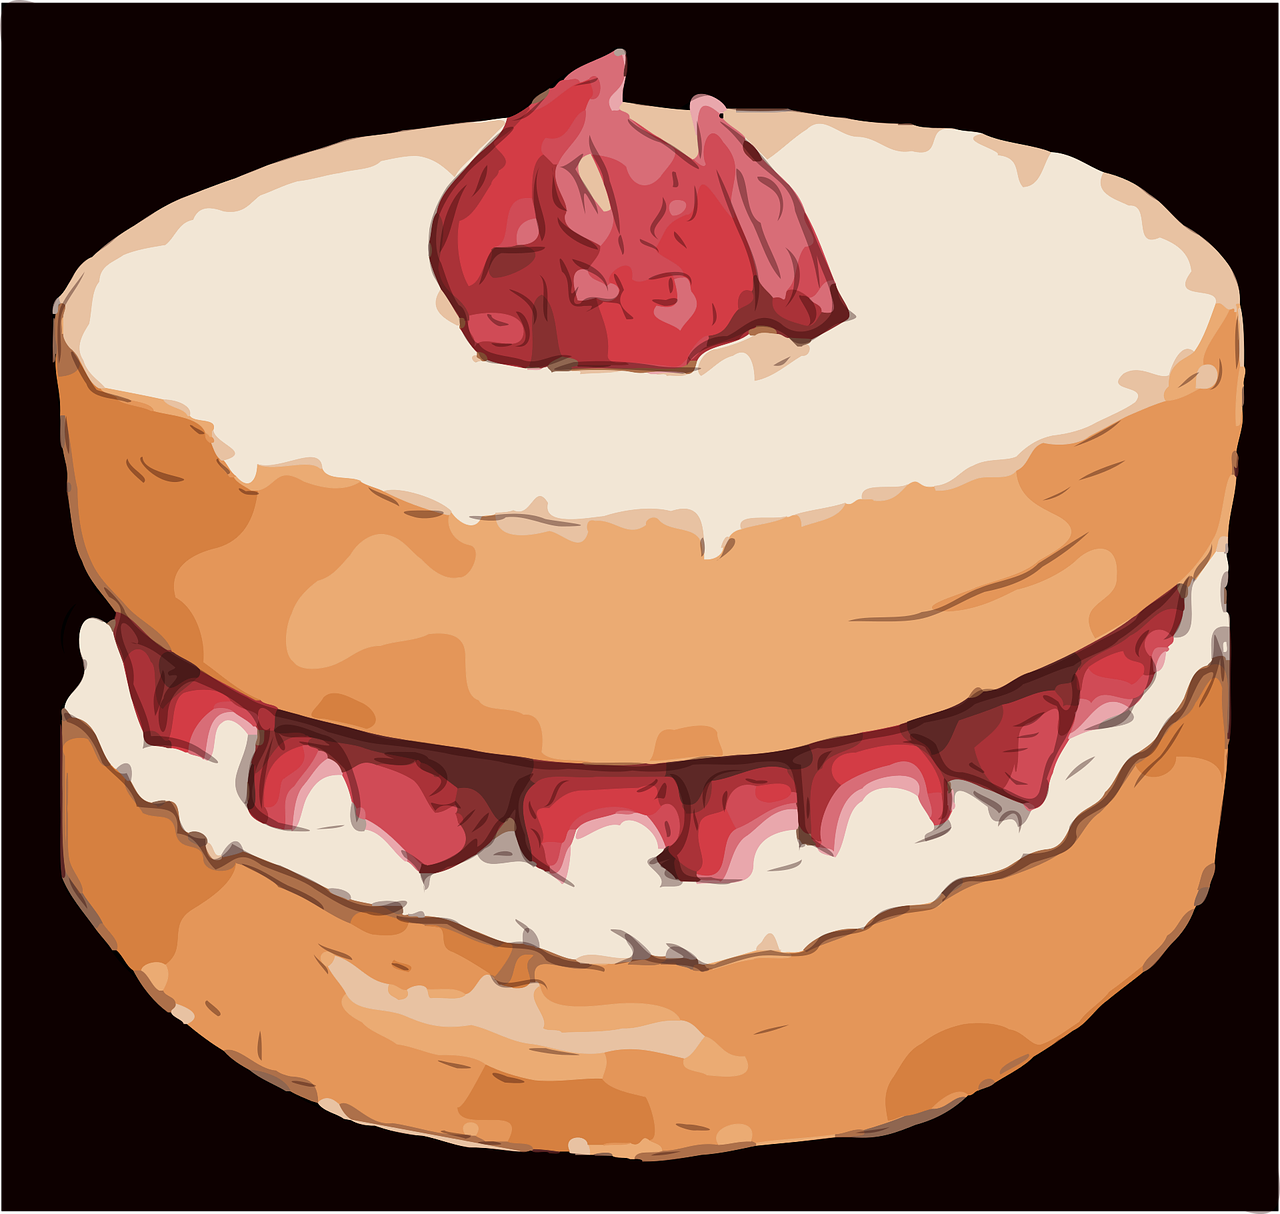 Giant Strawberry Shortcake